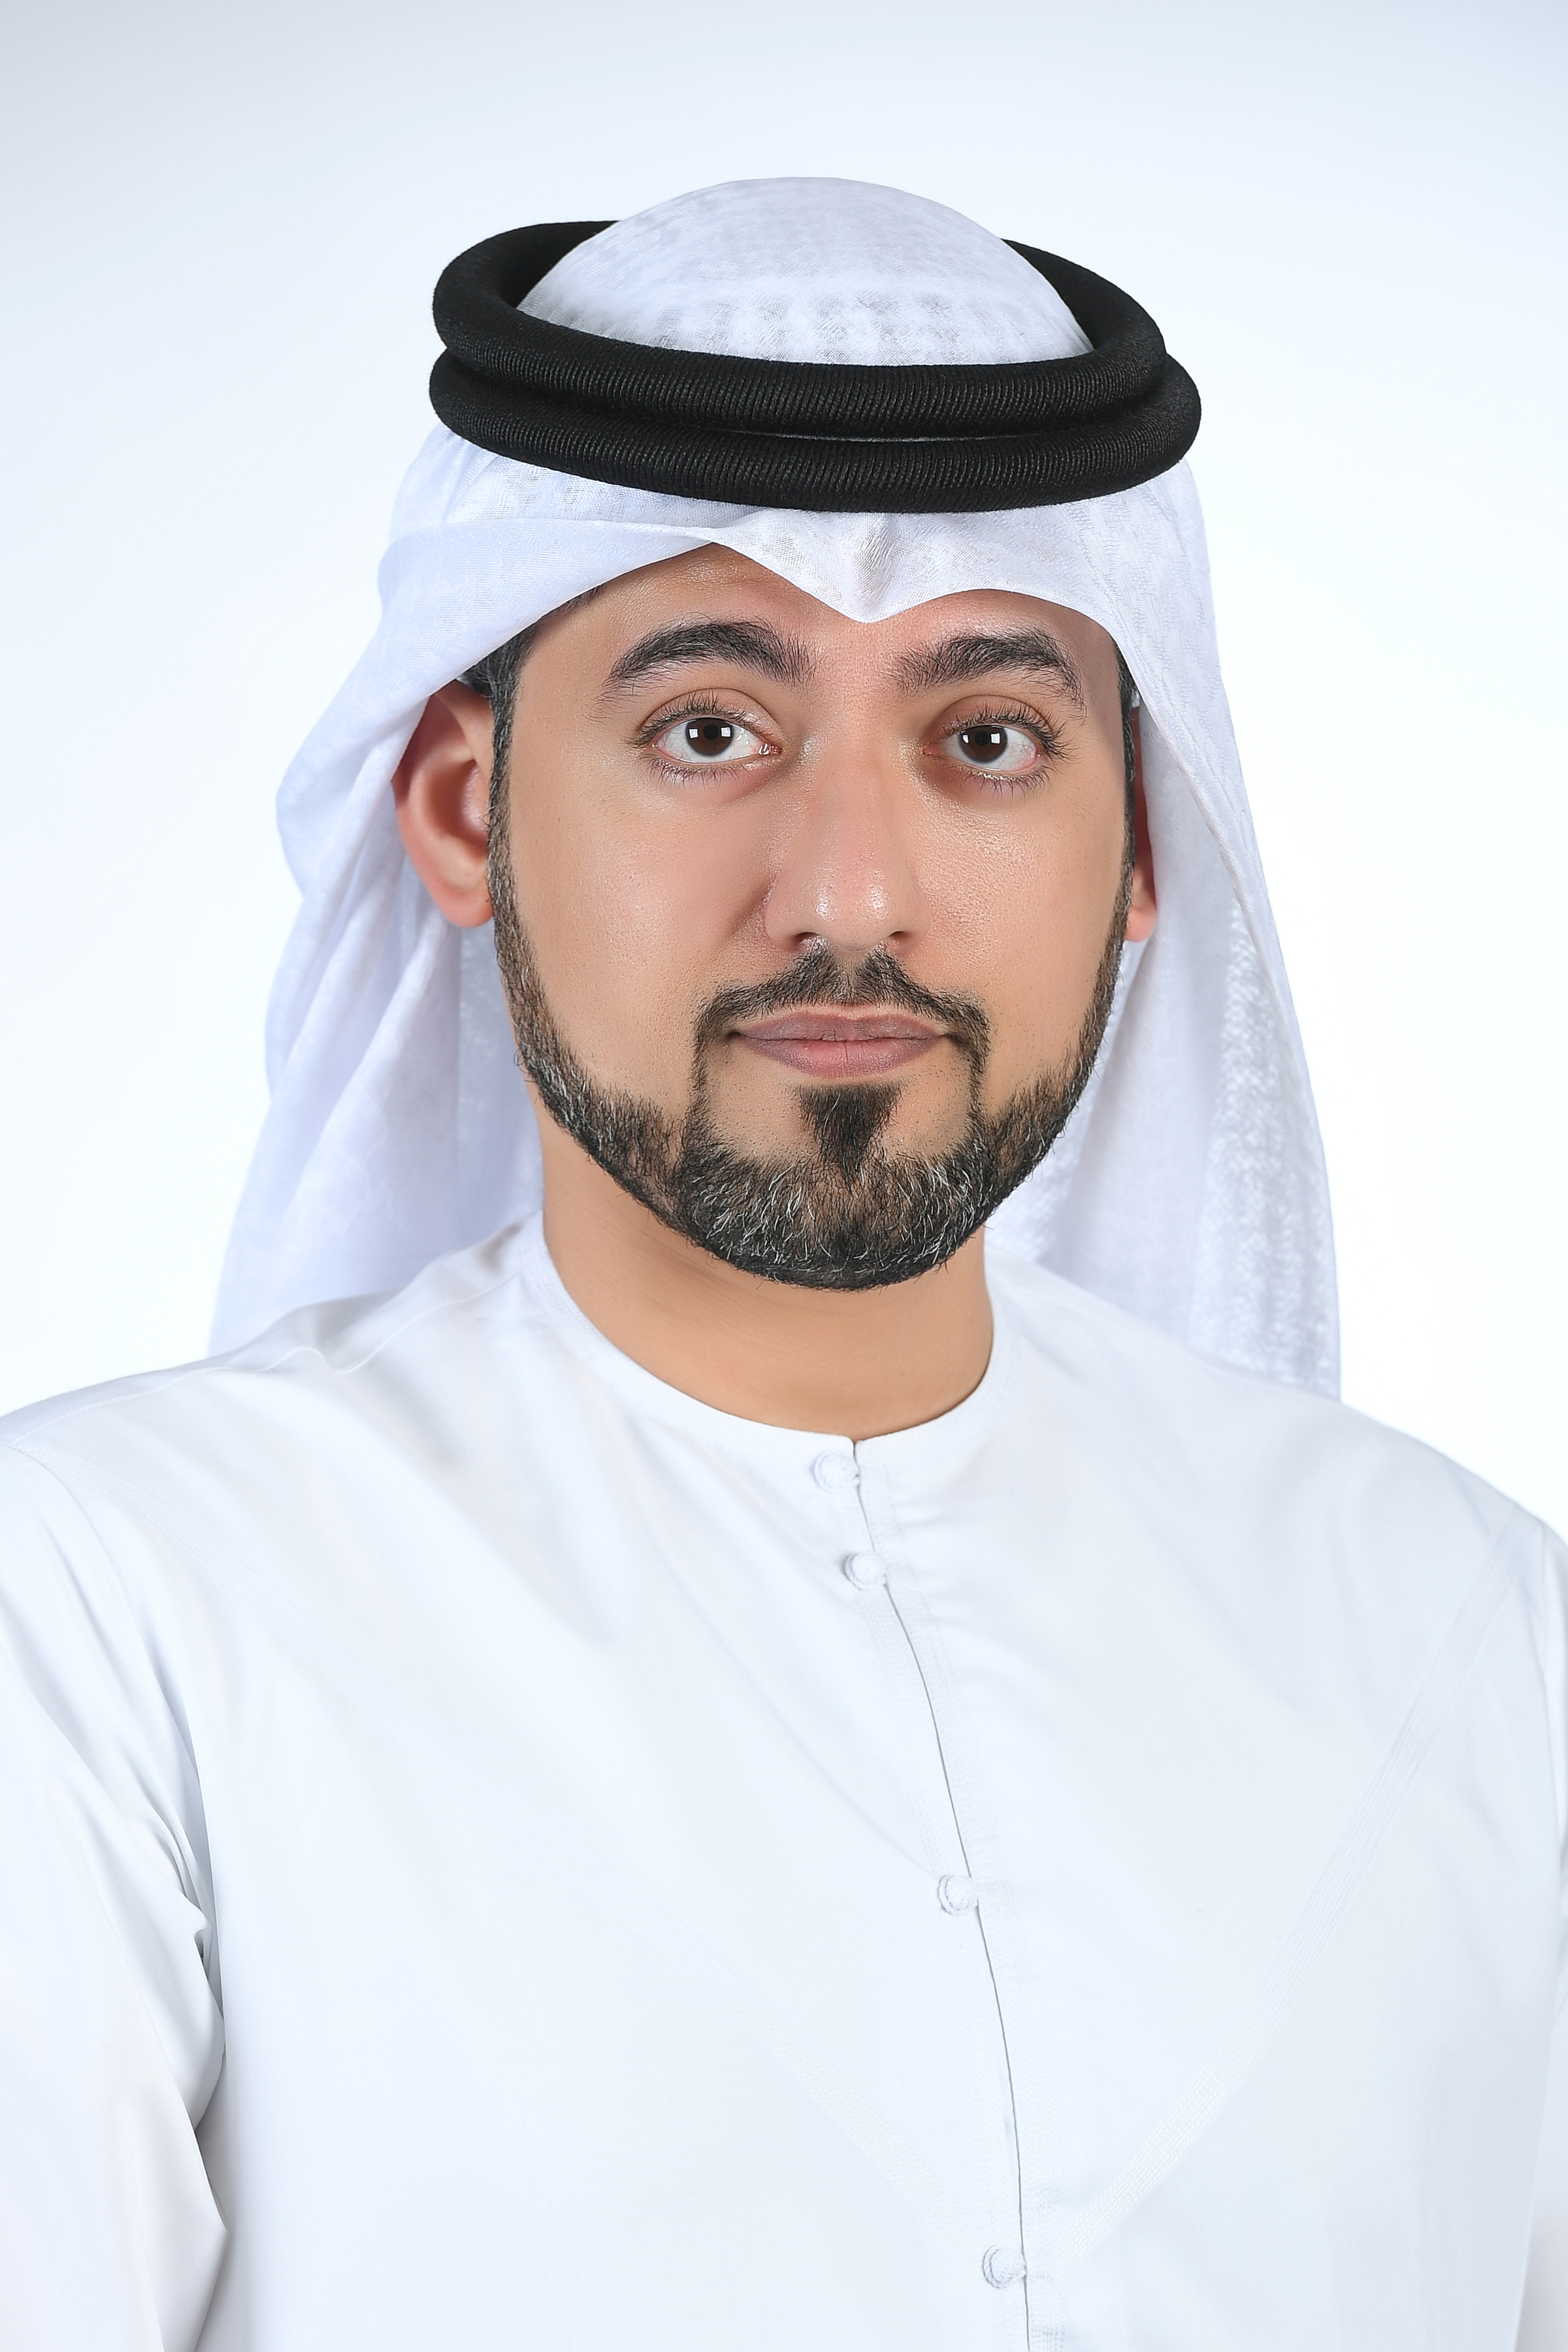 Dr. Ahmed Al Tunaiji